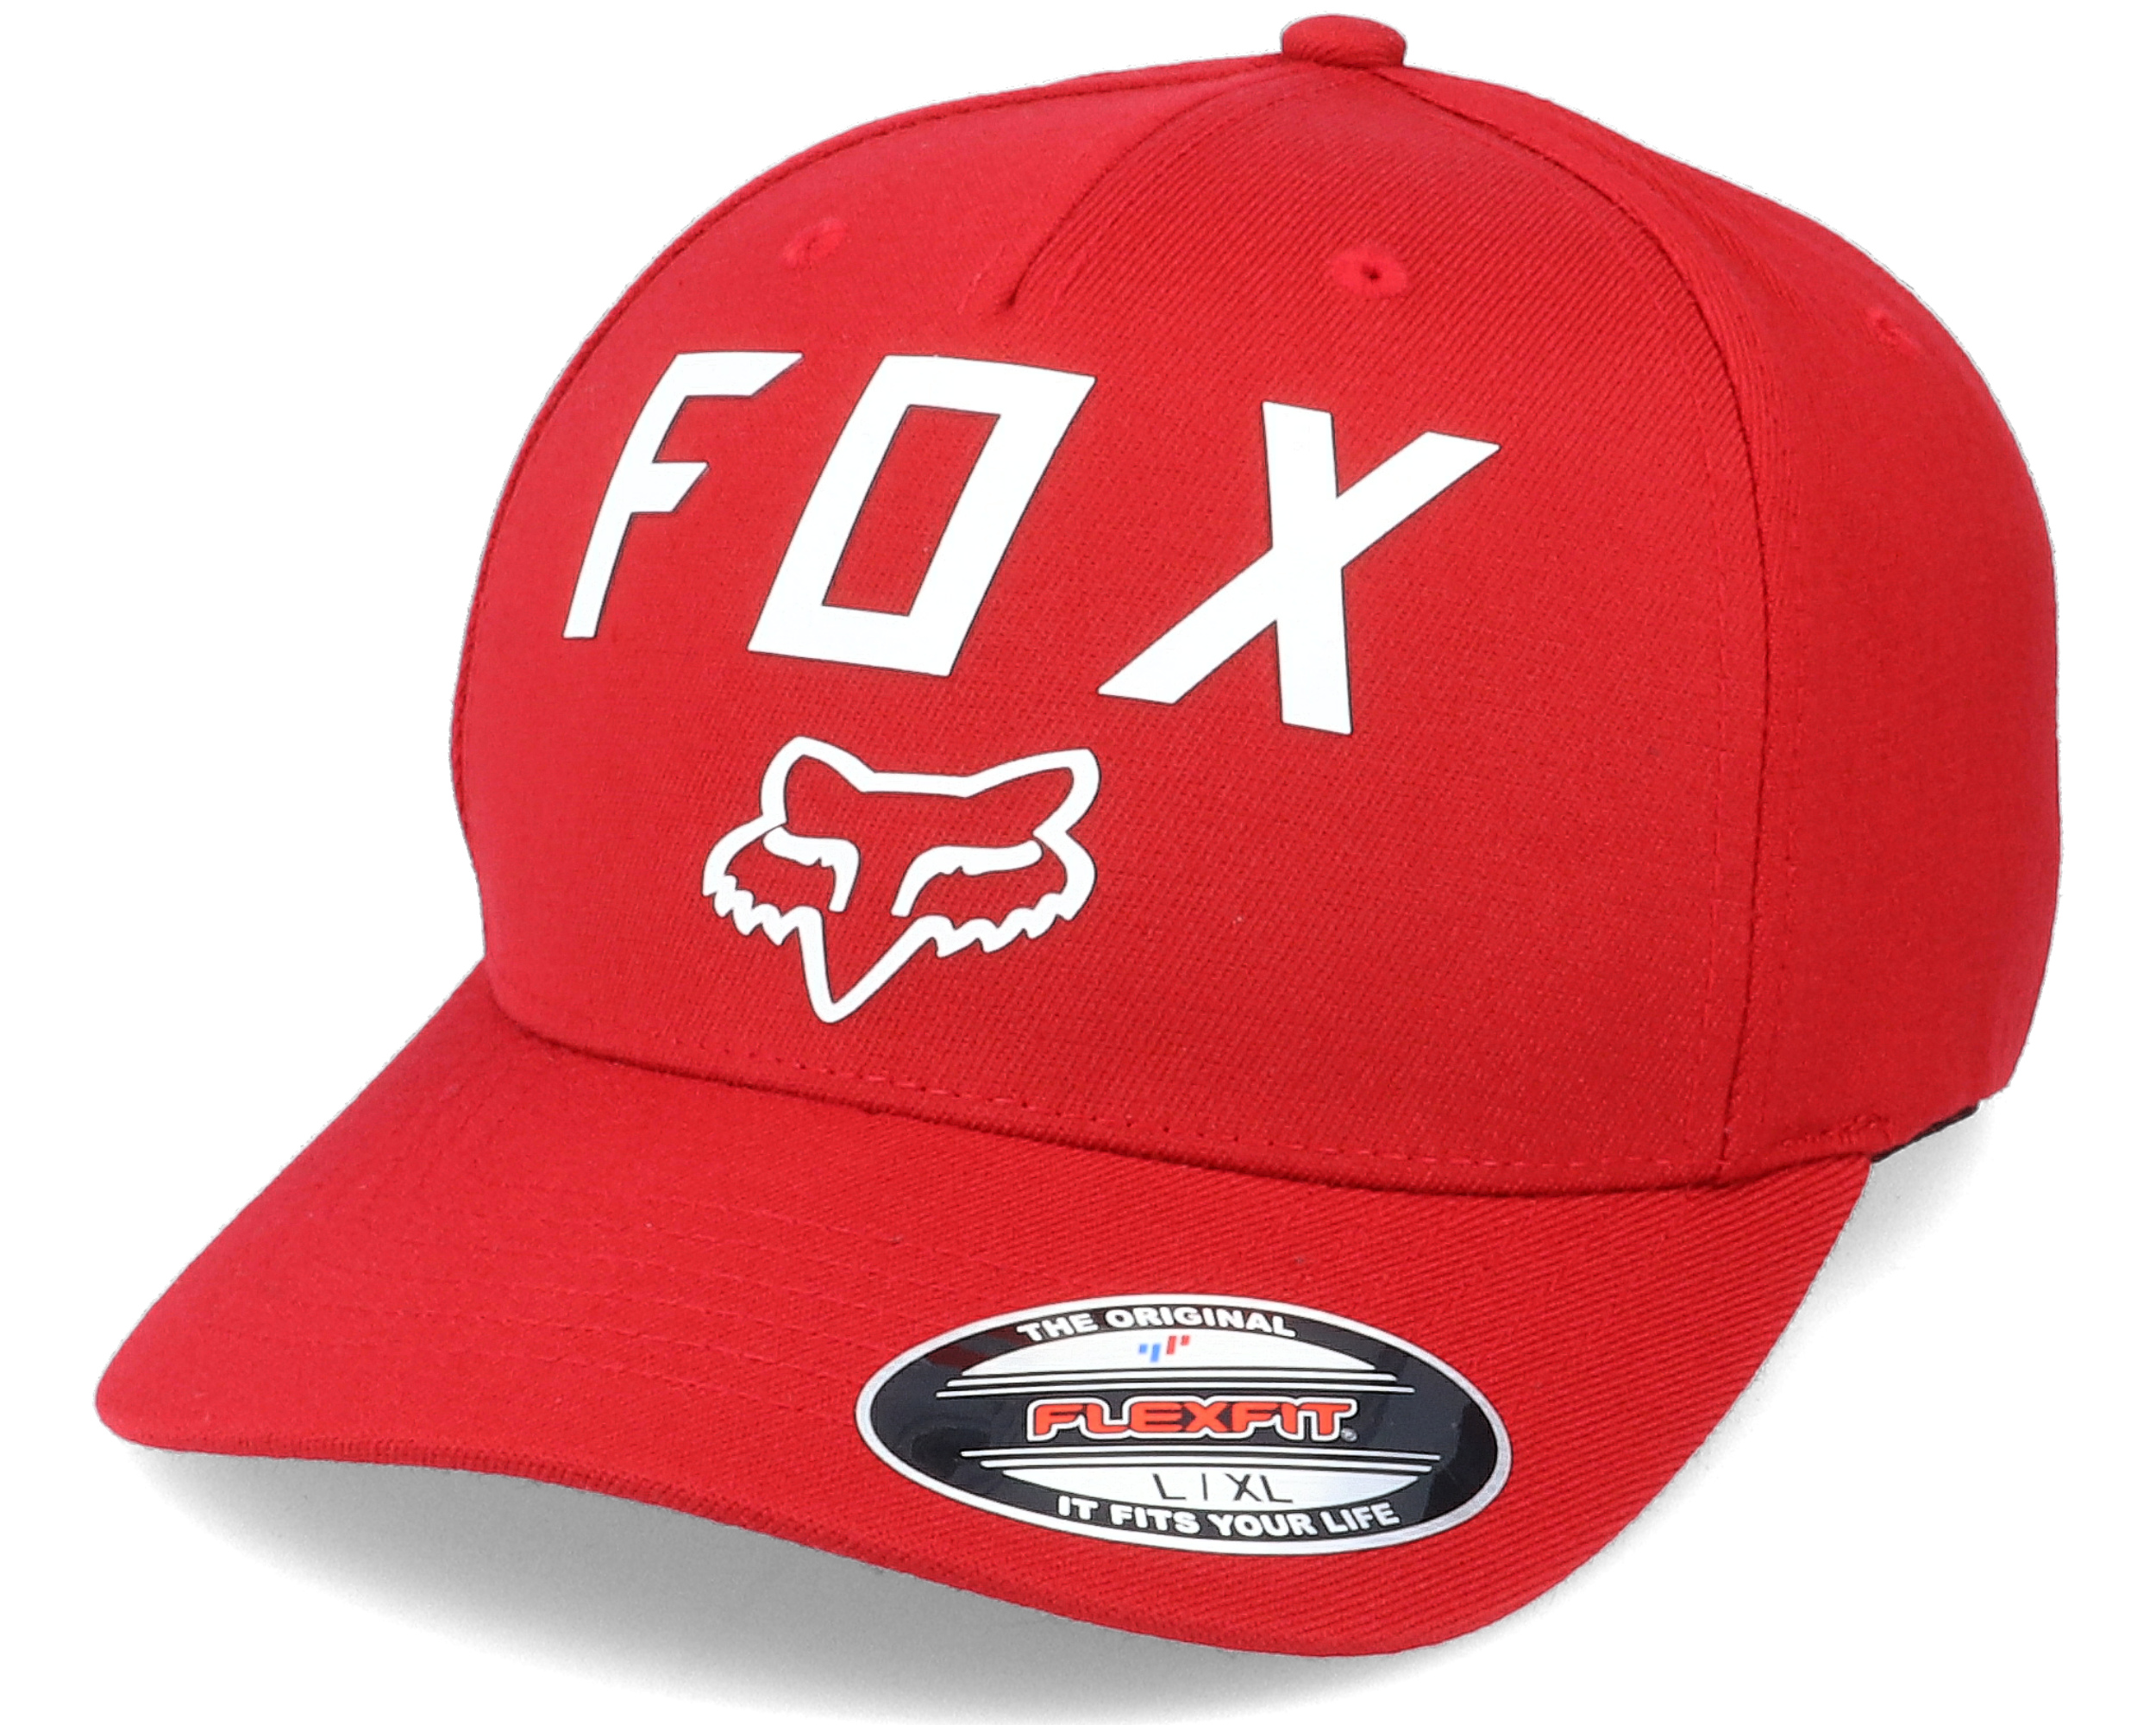 Бейсболка Fox Standard Flexfit. Кепка Fox 2017. 110 Fox кепка 2017. Кепка Fox Lithotype Flexfit hat. Fox fit